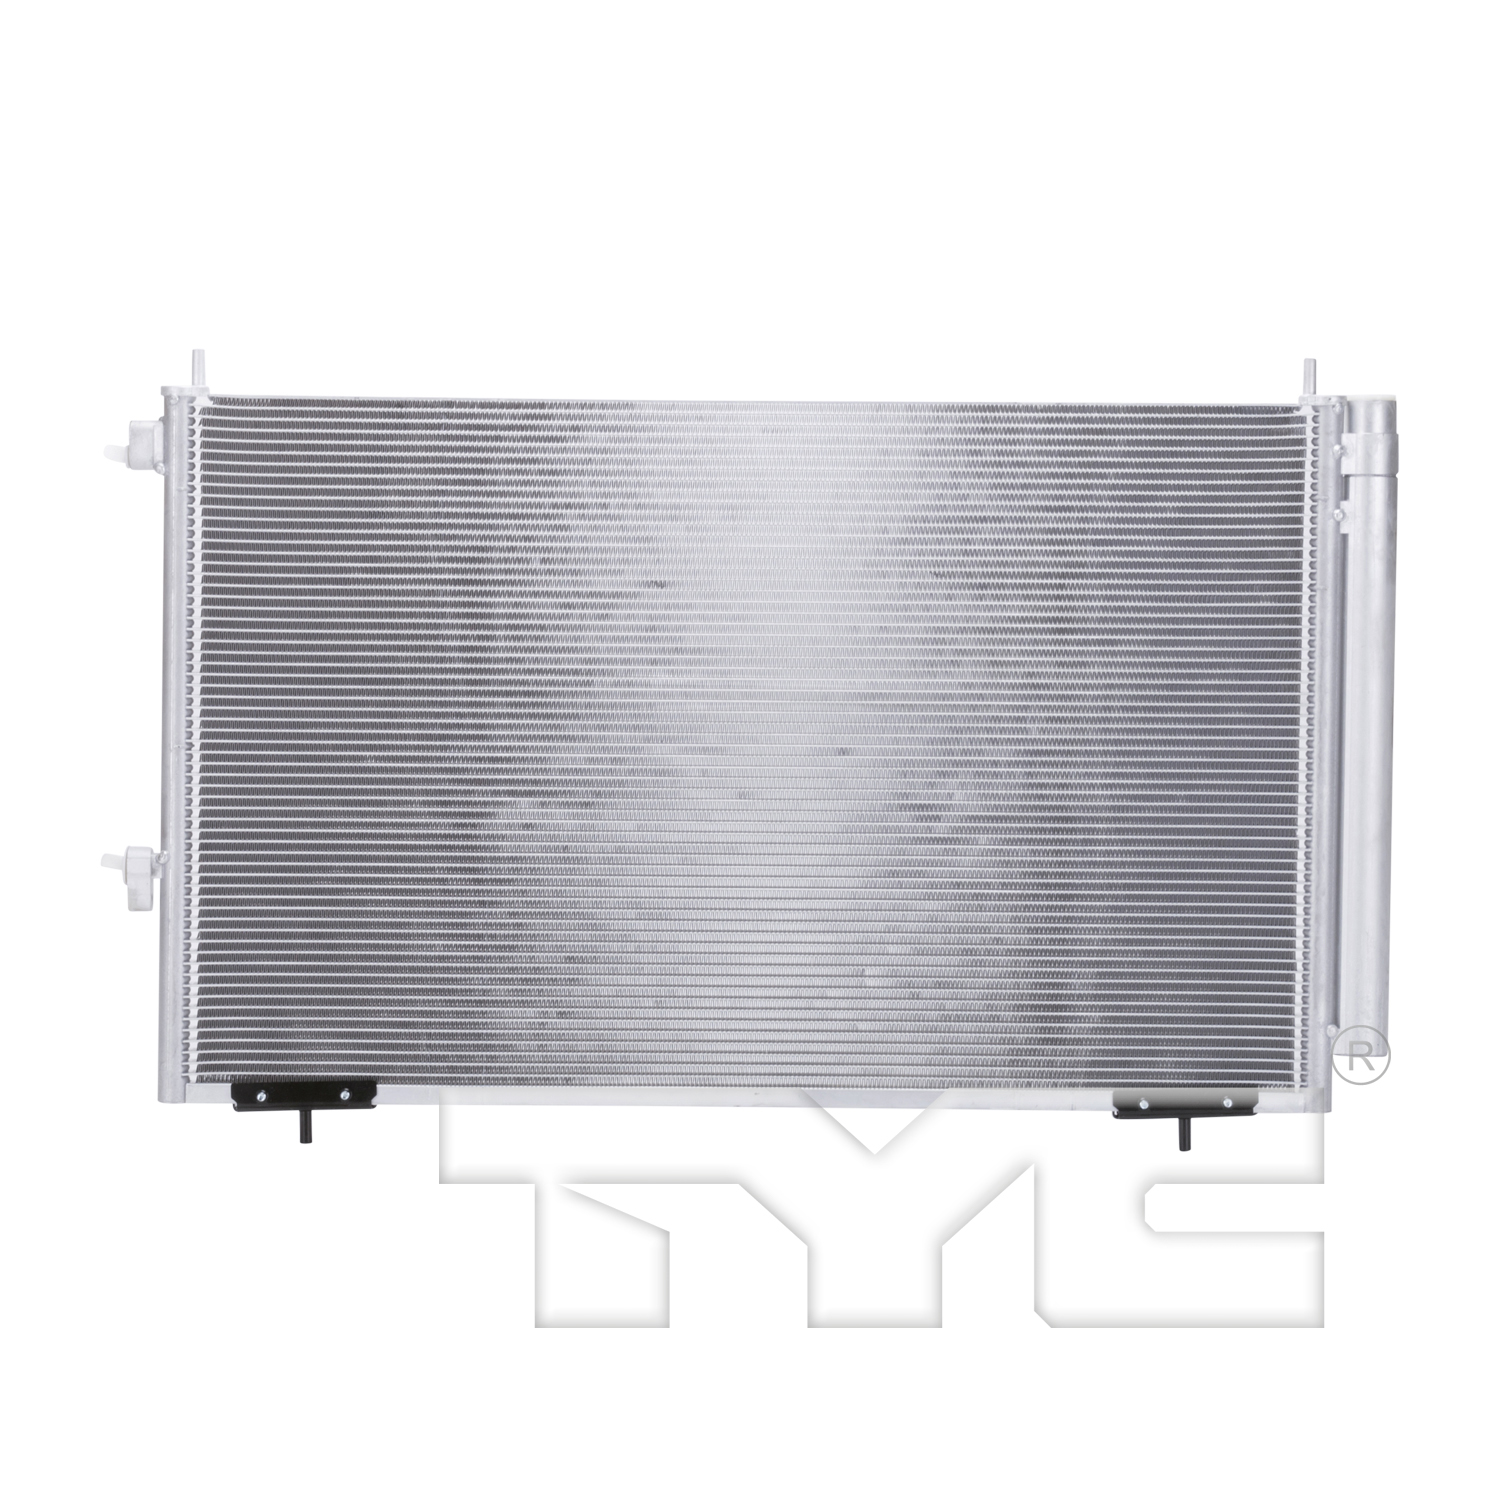 Aftermarket AC CONDENSERS for TOYOTA - RAV4, RAV4,13-18,Air conditioning condenser